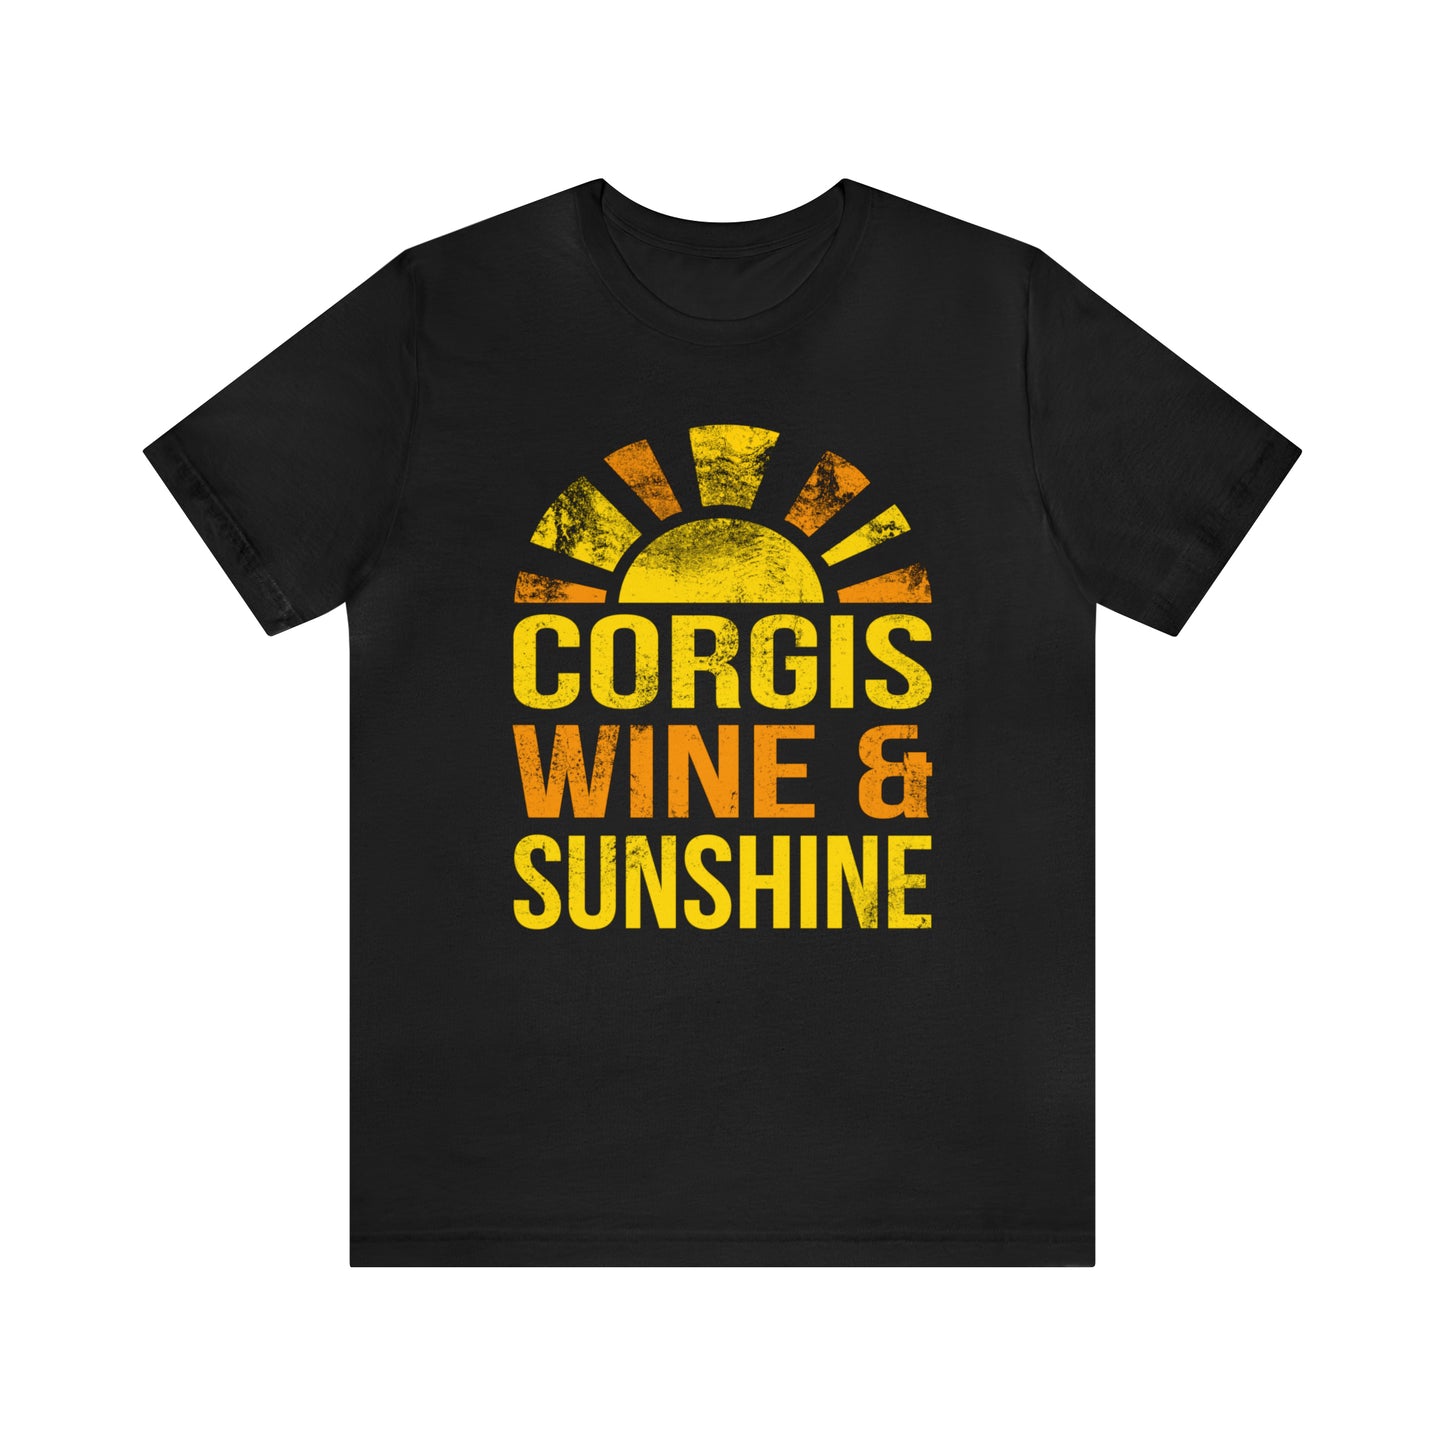 black corgis wine sunshine summer woman man t-shirt unisex short sleeve shirt grunge distressed